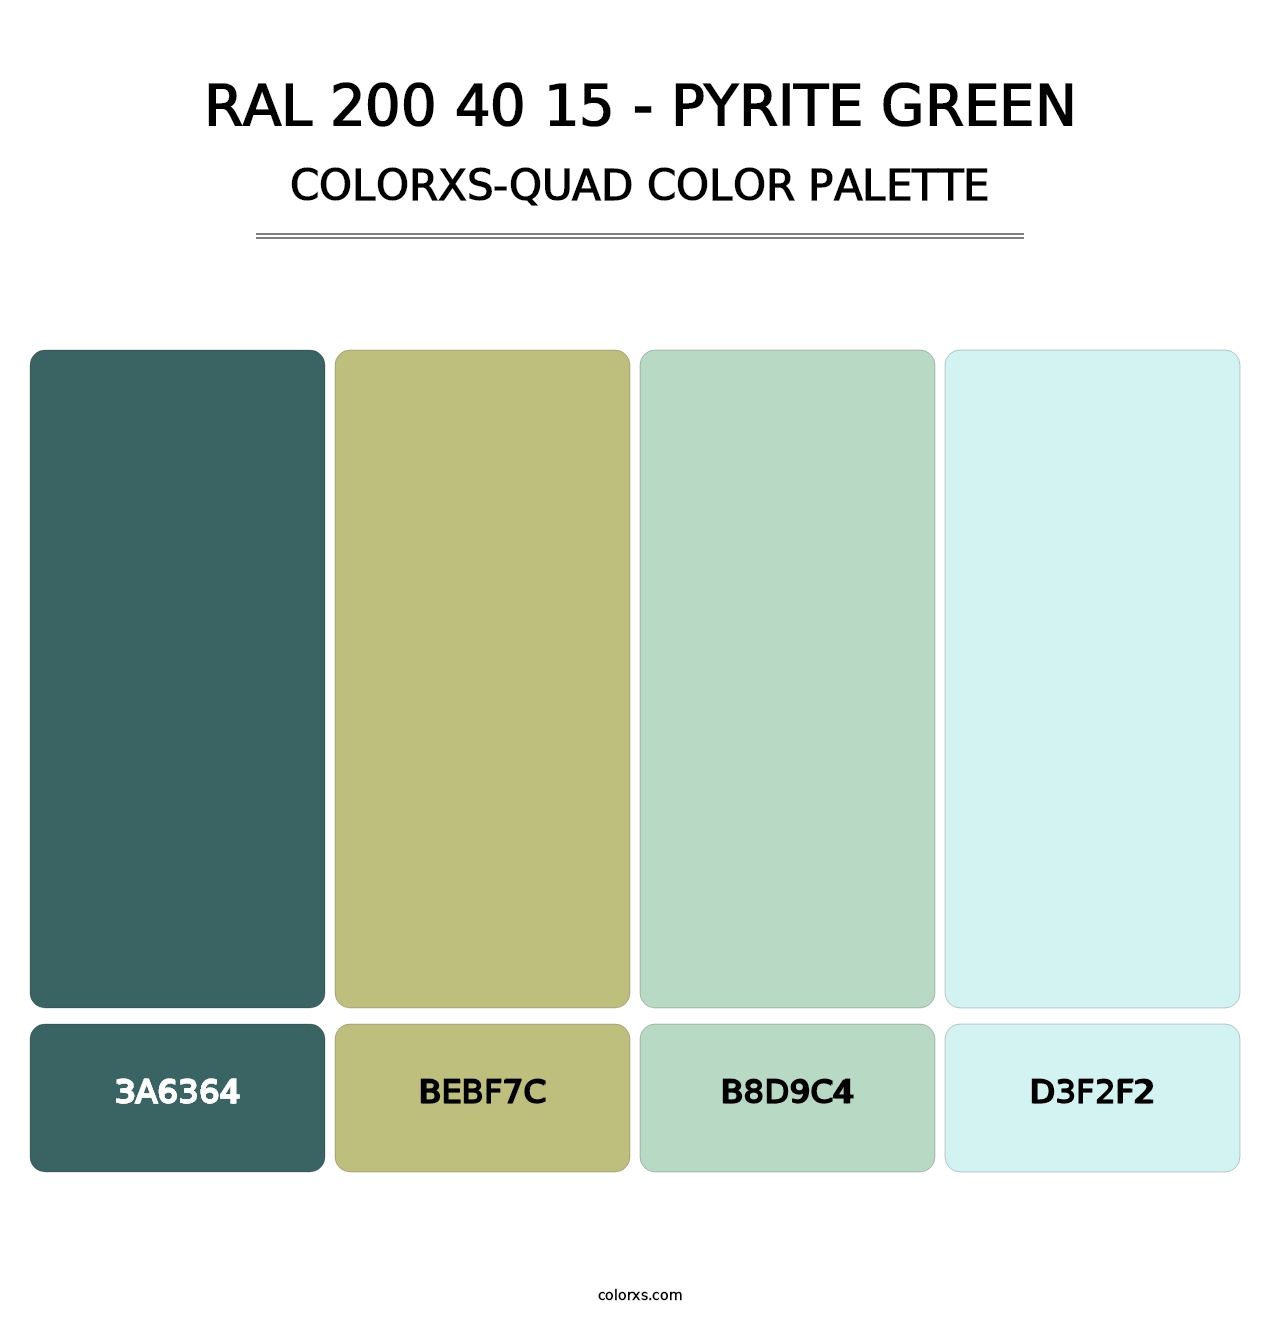 RAL 200 40 15 - Pyrite Green - Colorxs Quad Palette